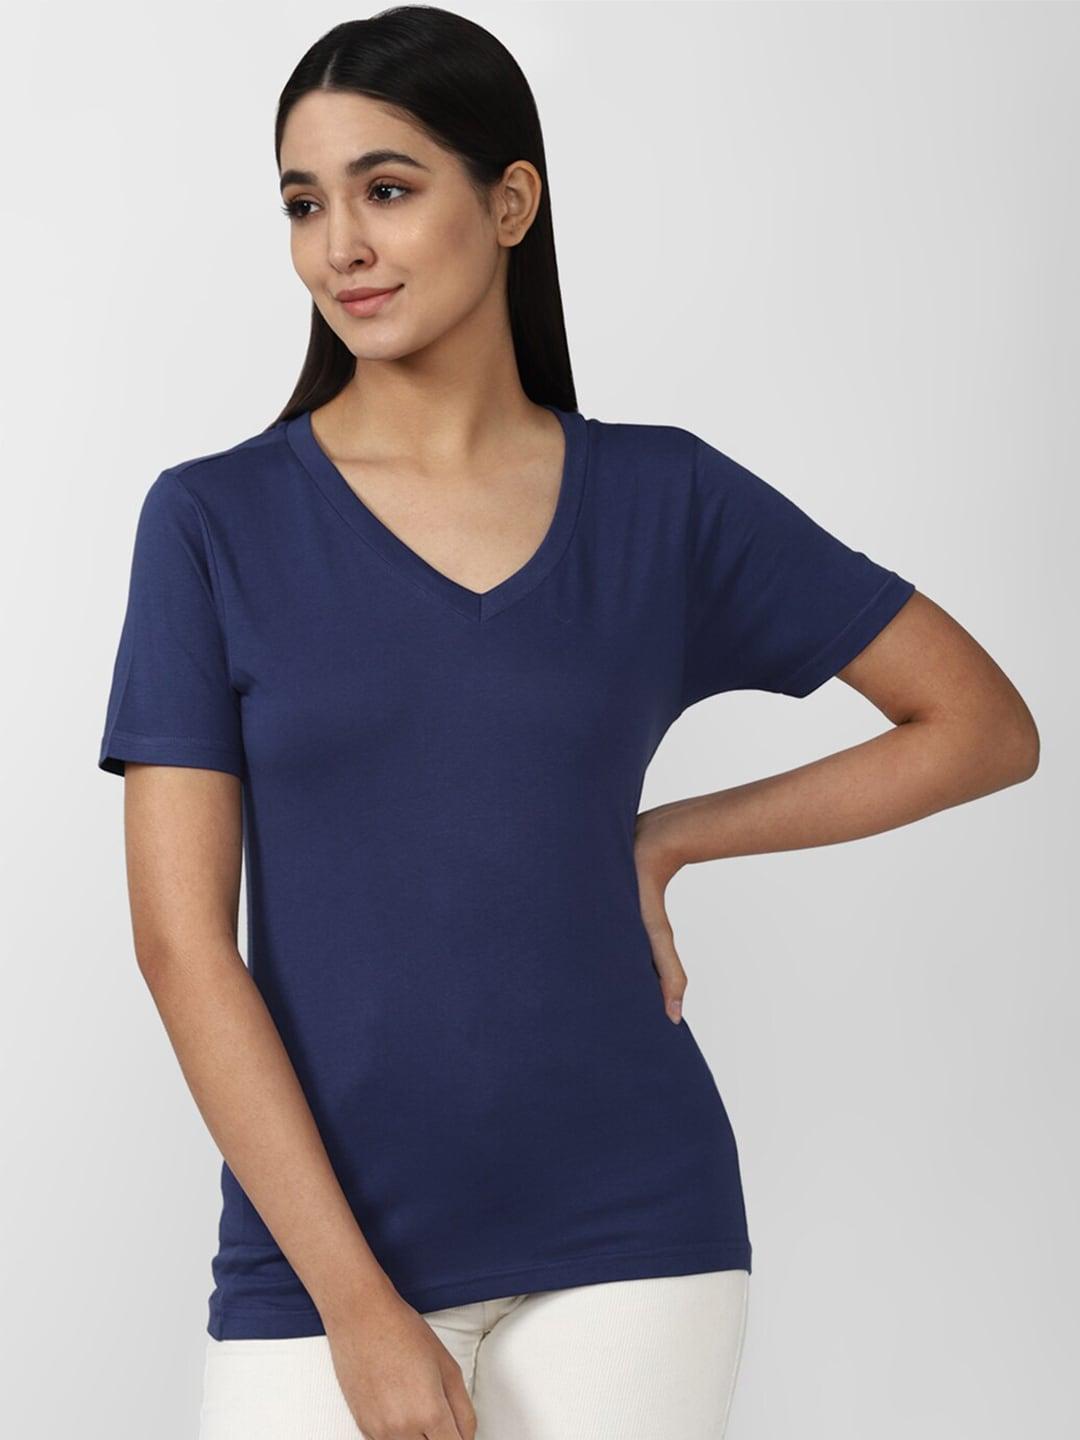 forever-21-women-navy-blue-v-neck-indigo-slim-fit-t-shirt